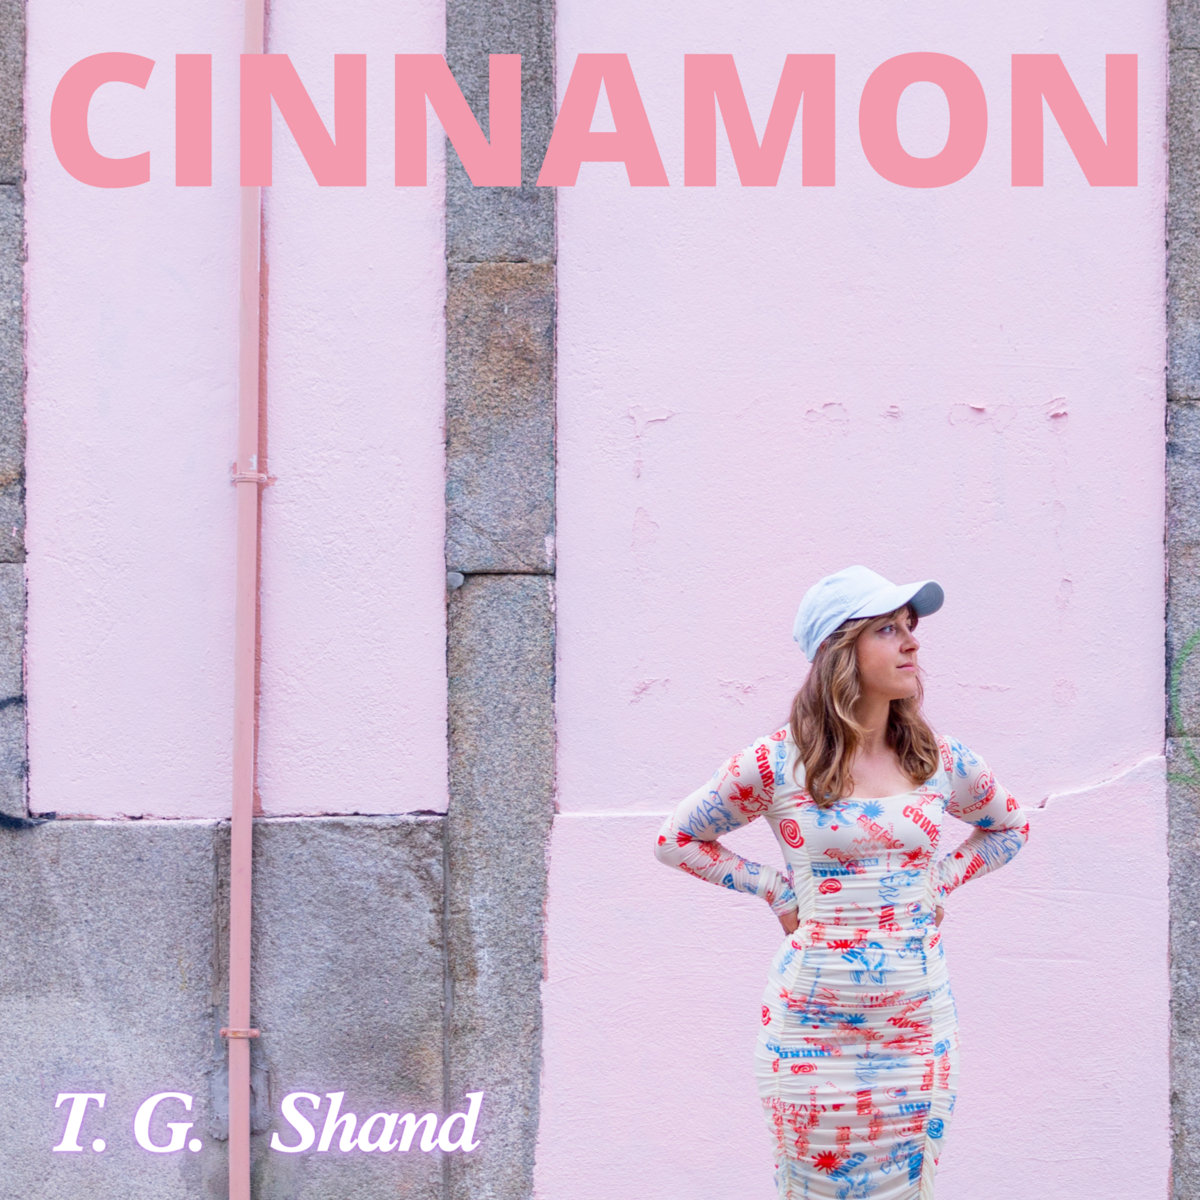 T.G. Shand shares long-awaited sophomore EP ‘Cinnamon’